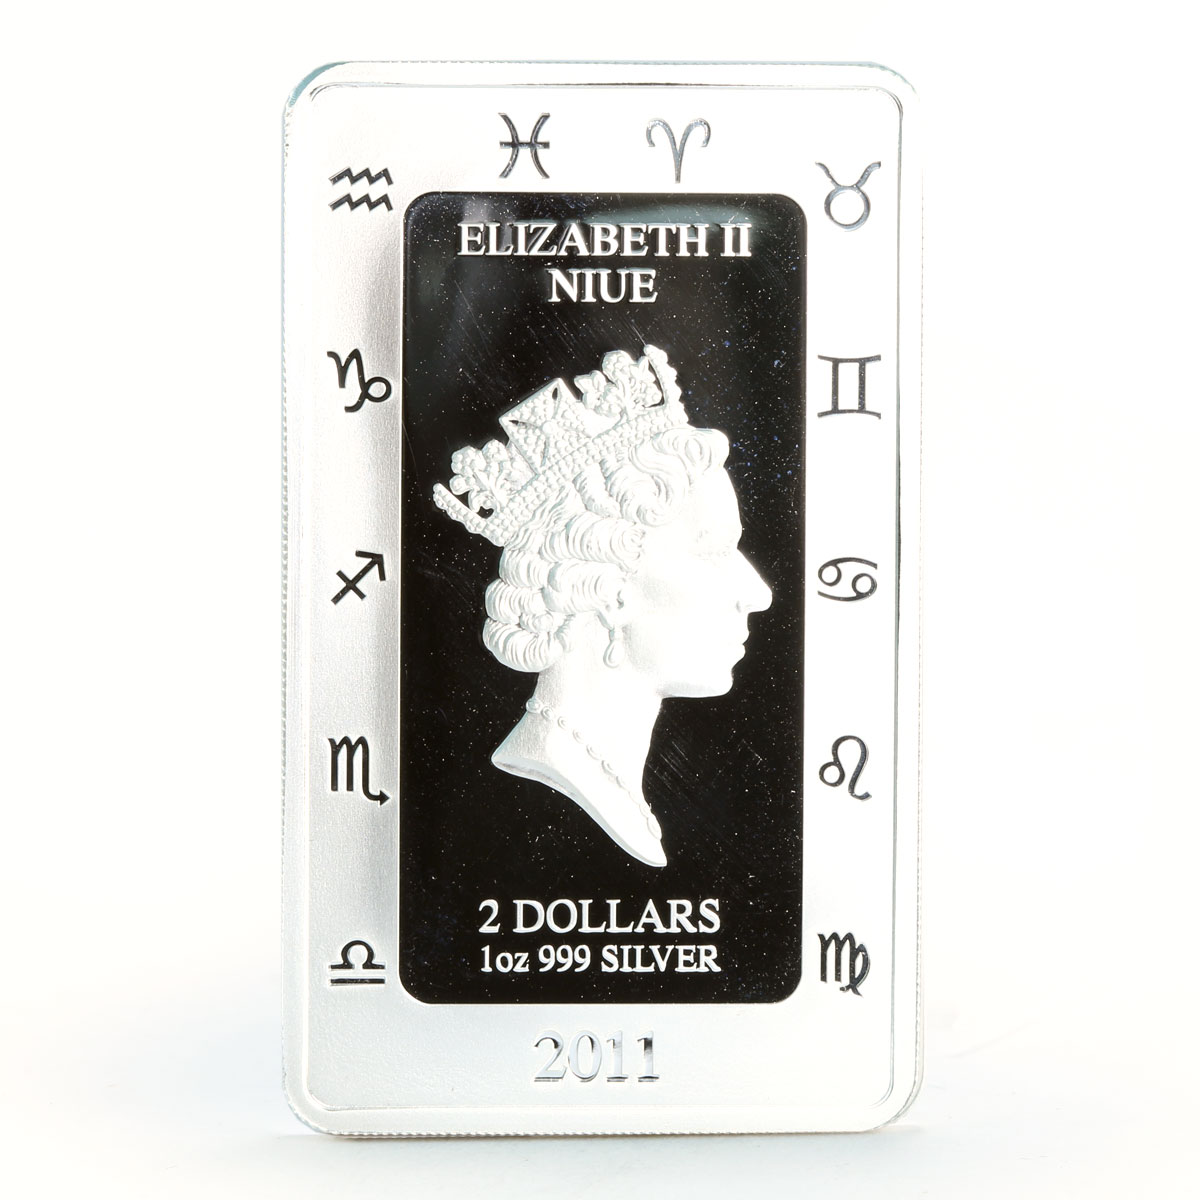 Niue 2 dollars Zodiac Signs series Sagittarius colored proof silver coin 2011